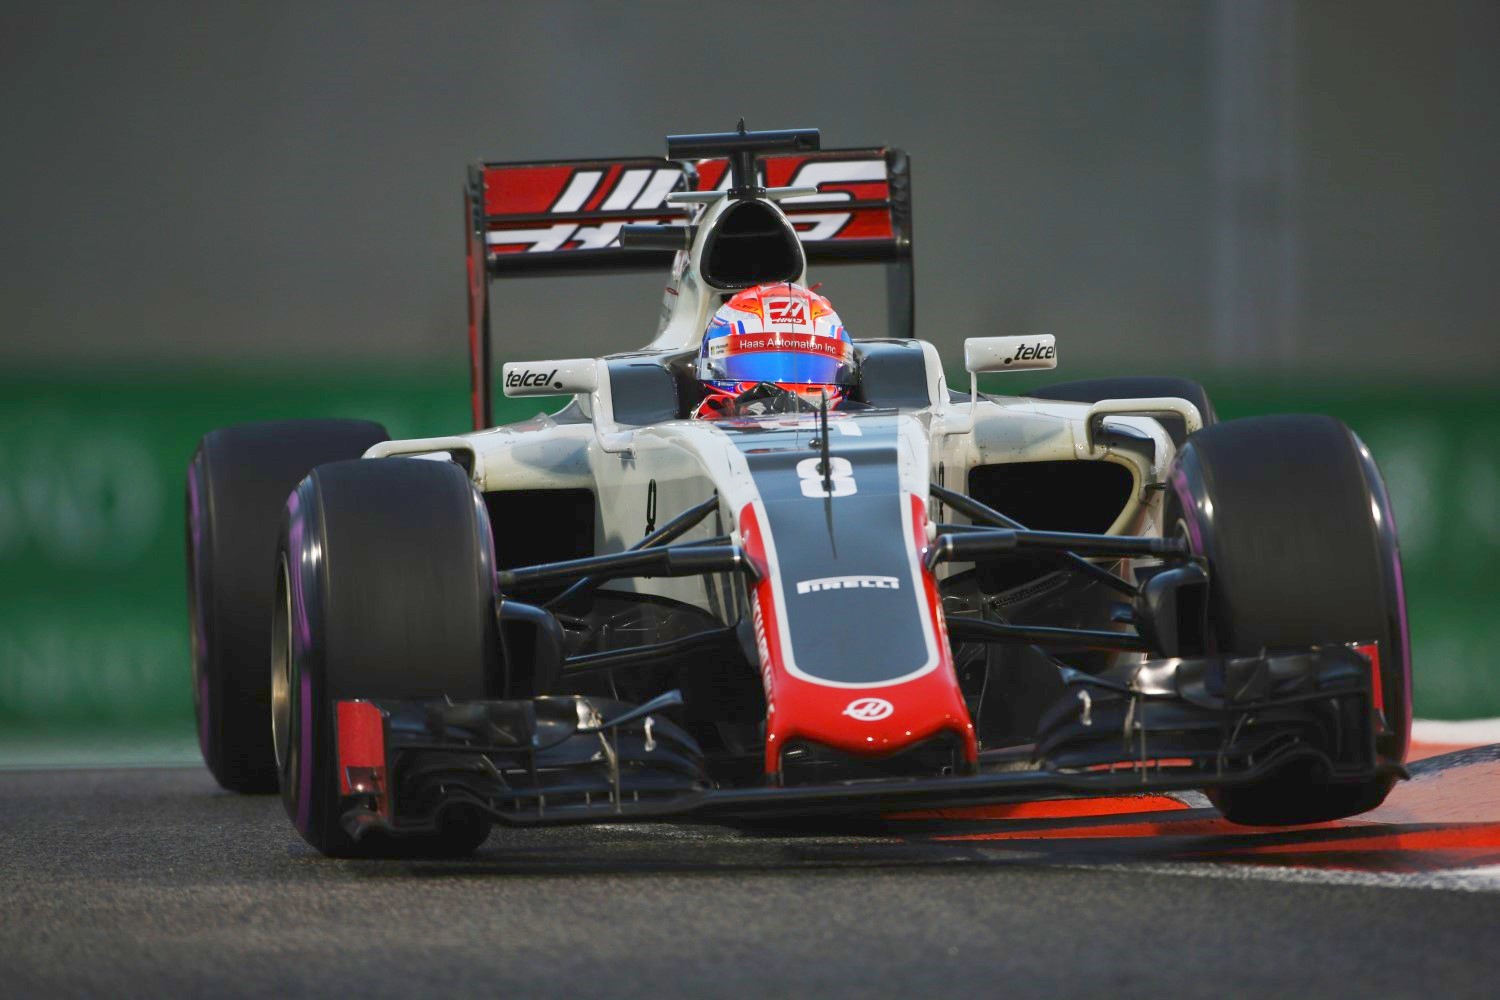 Haas driver Romain Grosjean